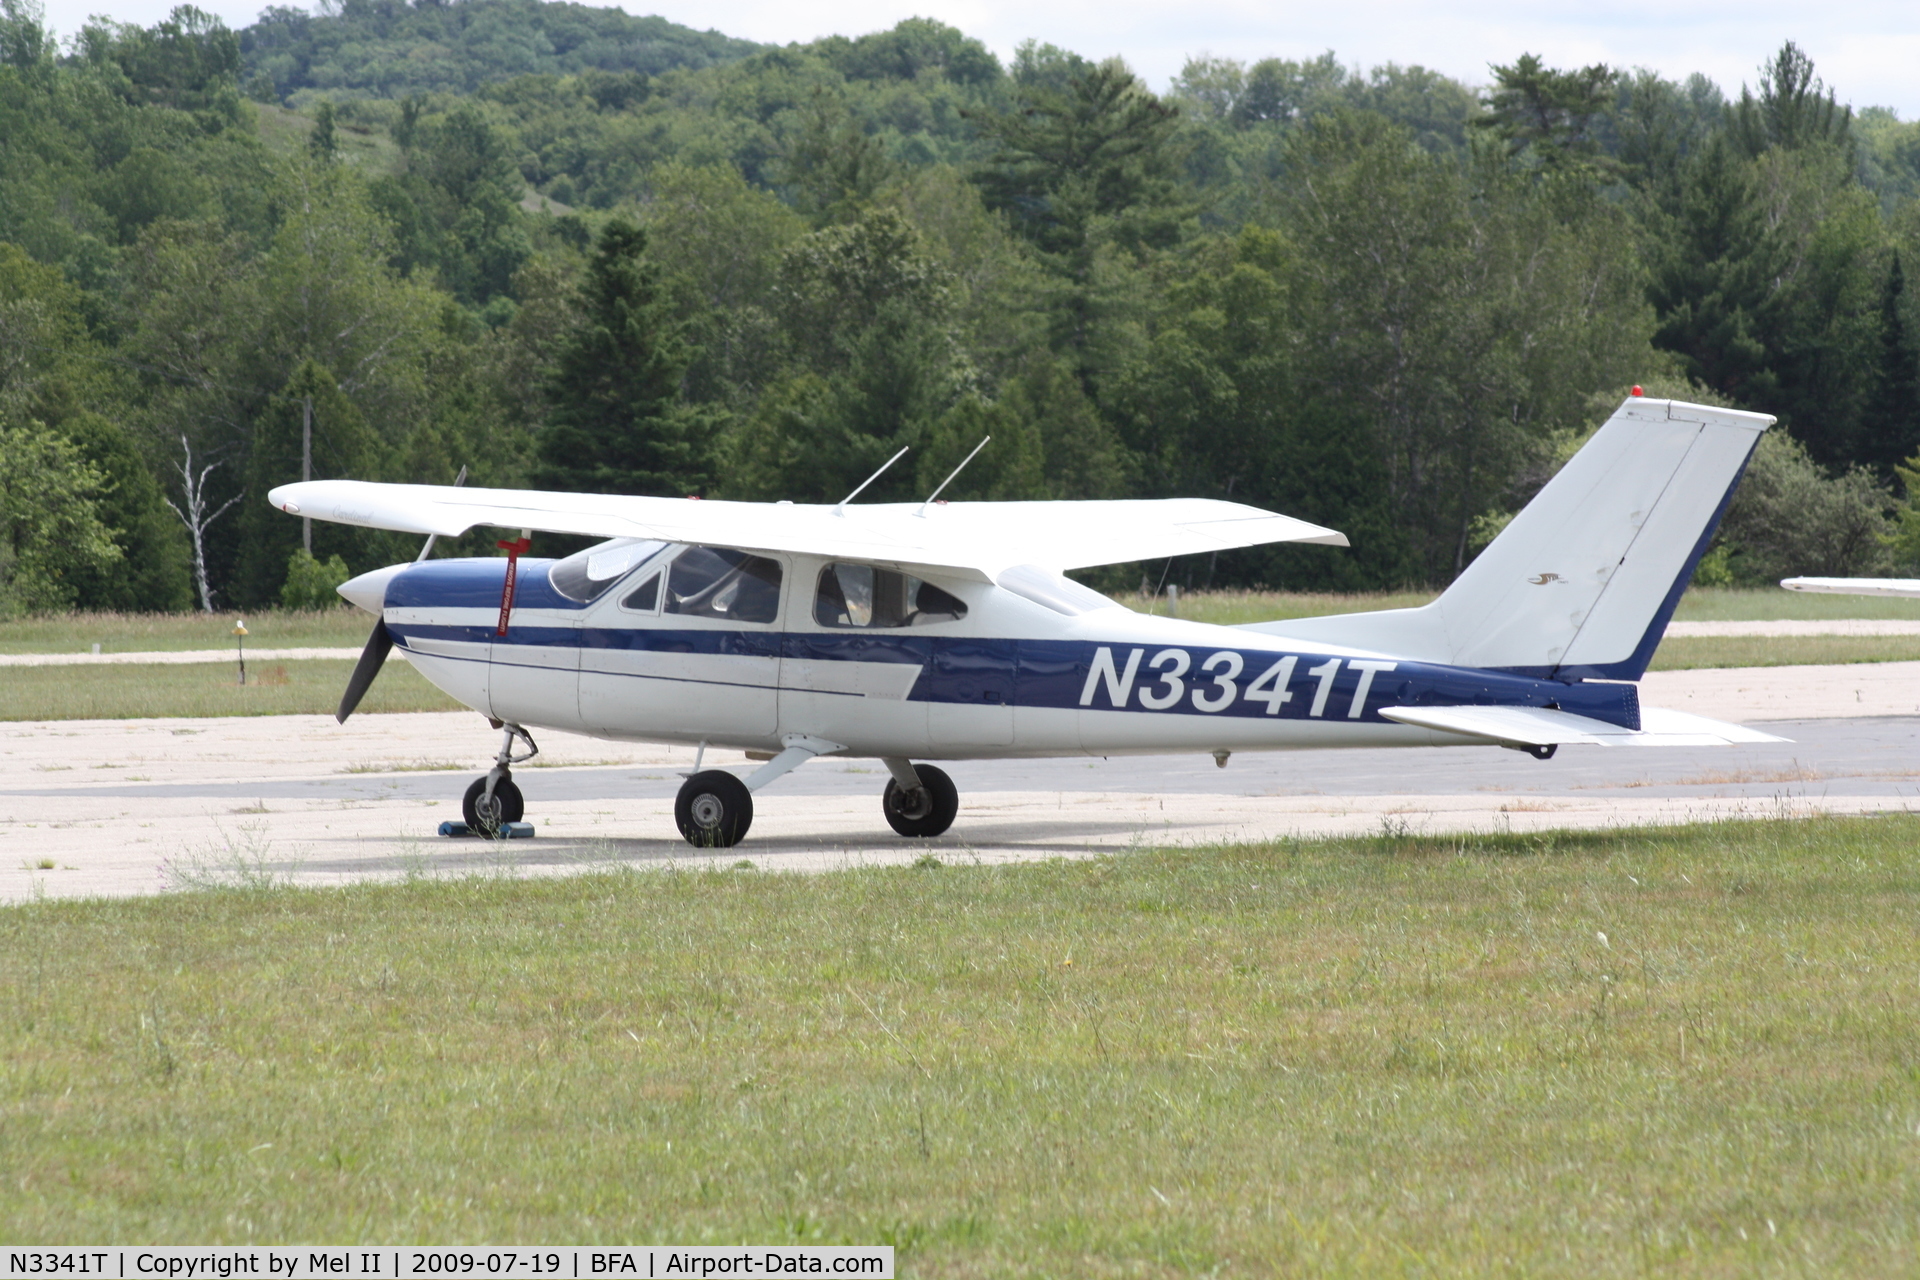 N3341T, 1967 Cessna 177 Cardinal C/N 17700641, Parked